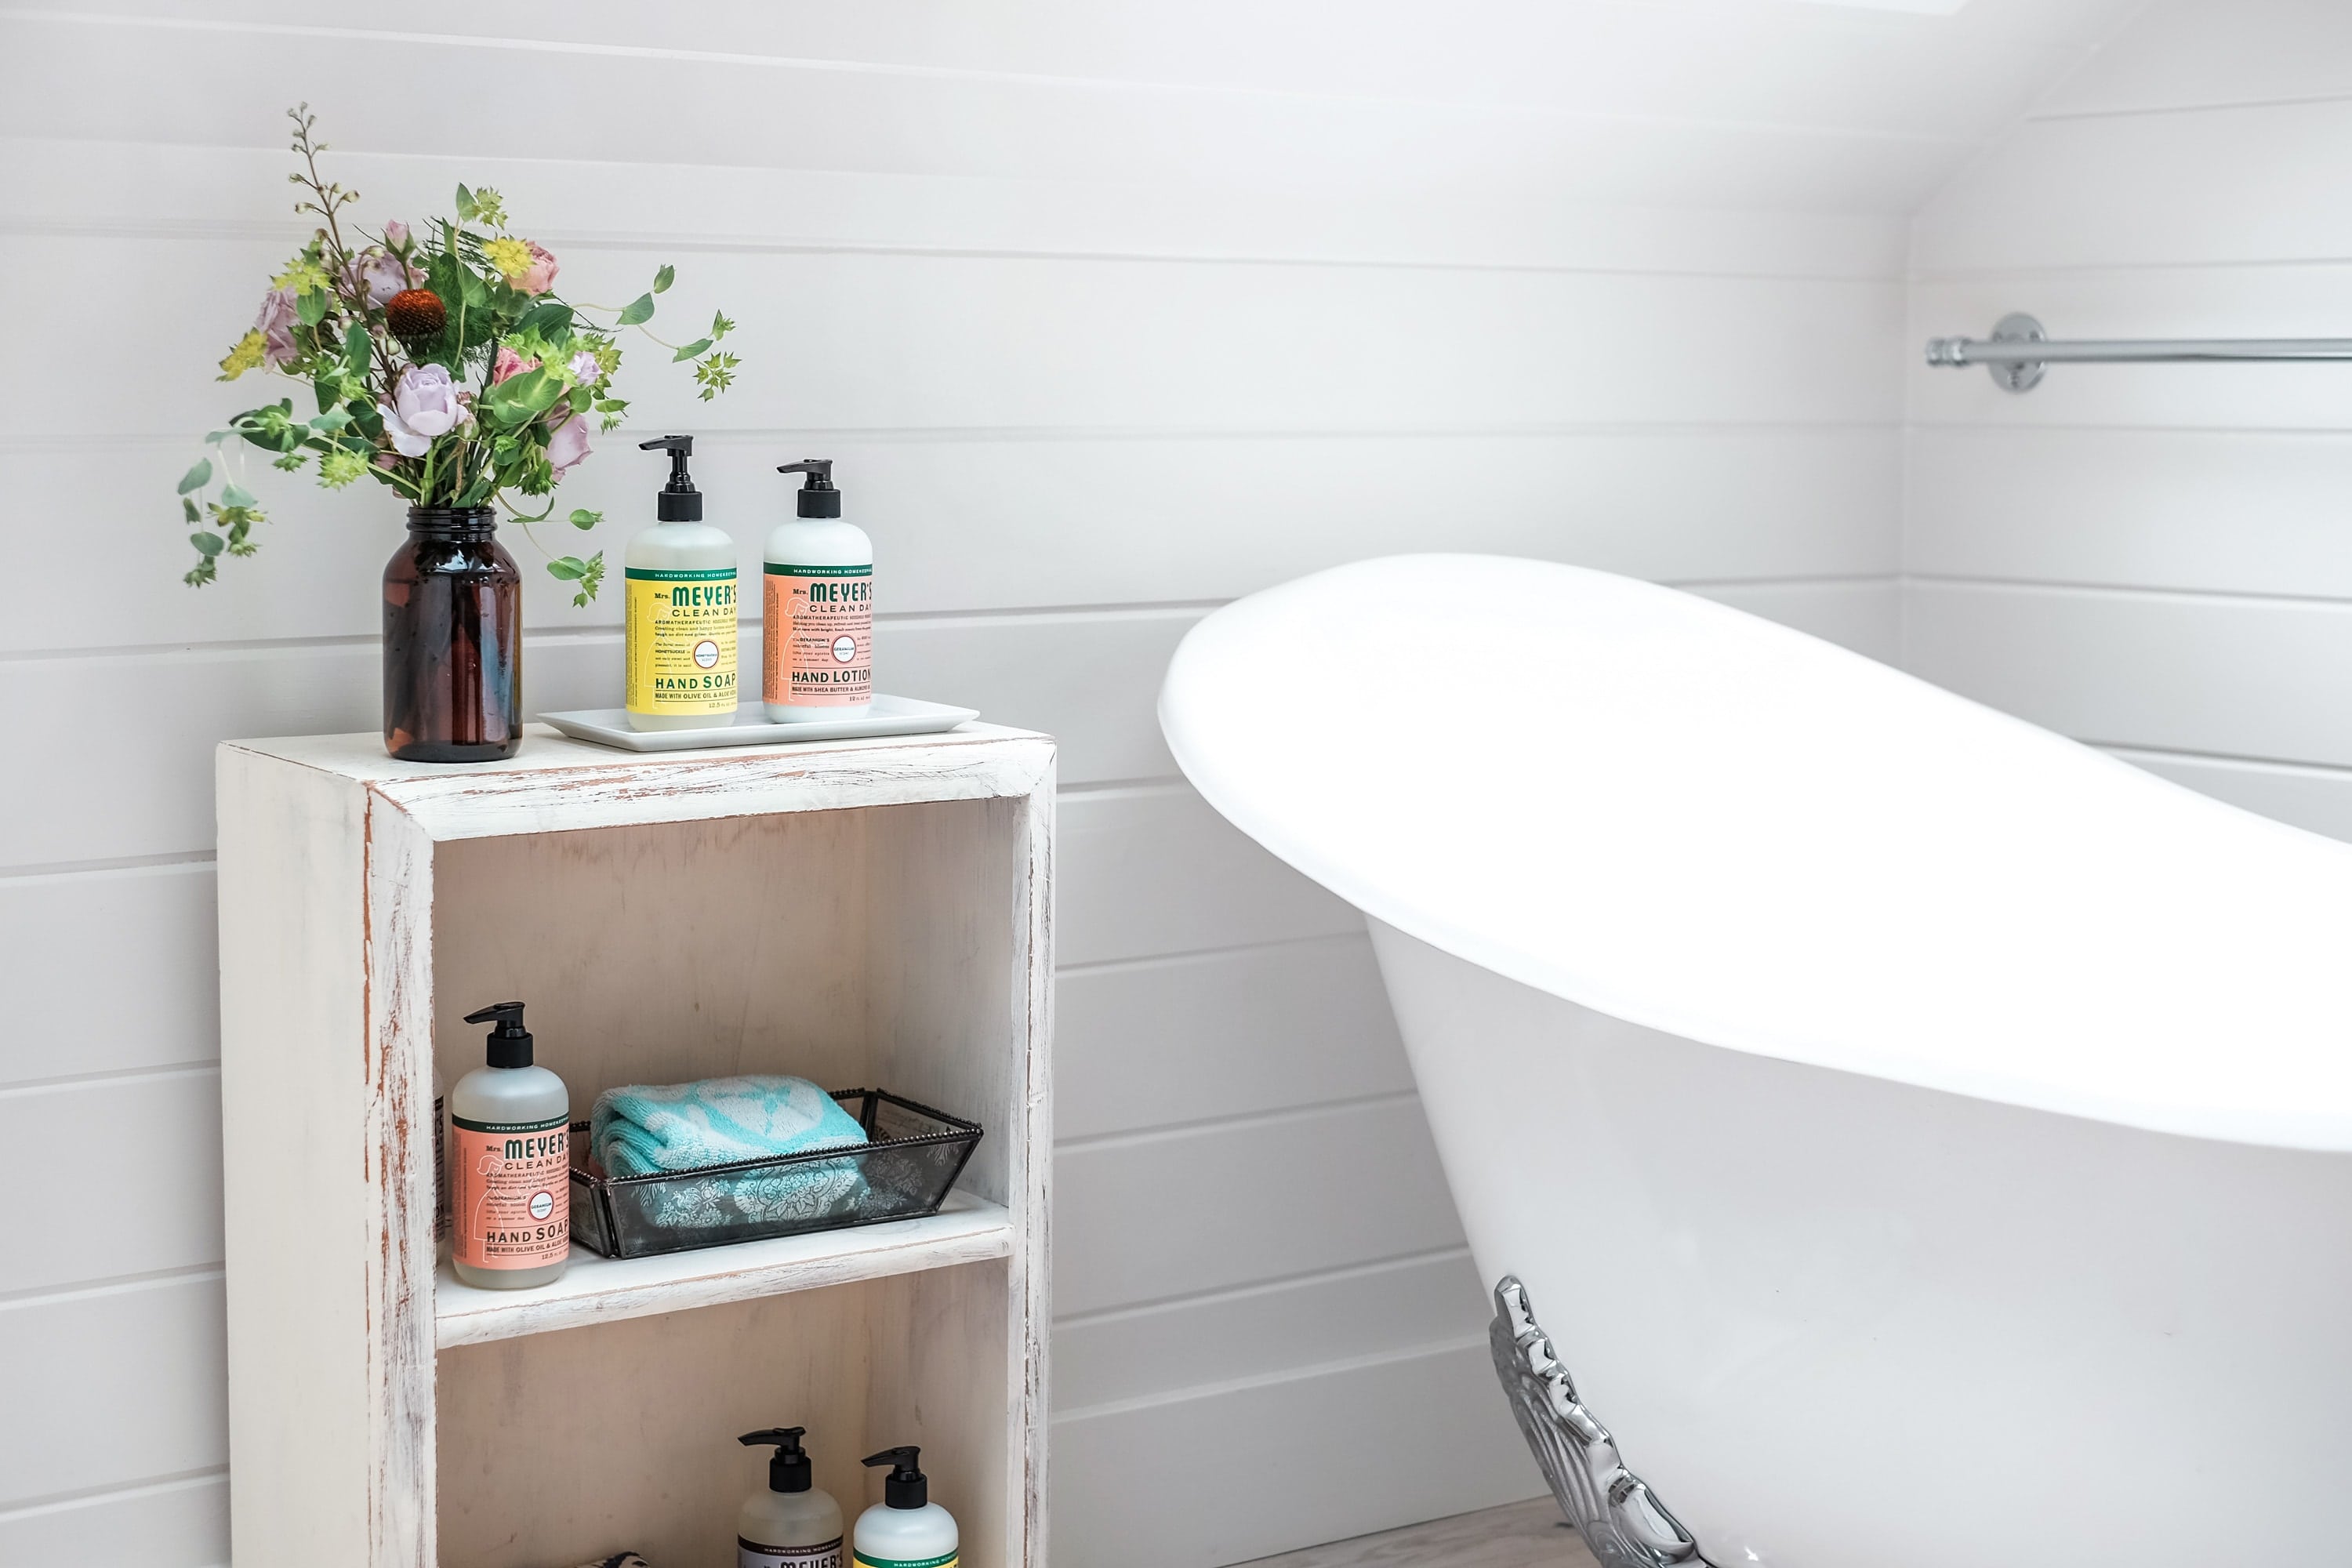 Bathroom Tub & Tile Cleaner – good green cleaner